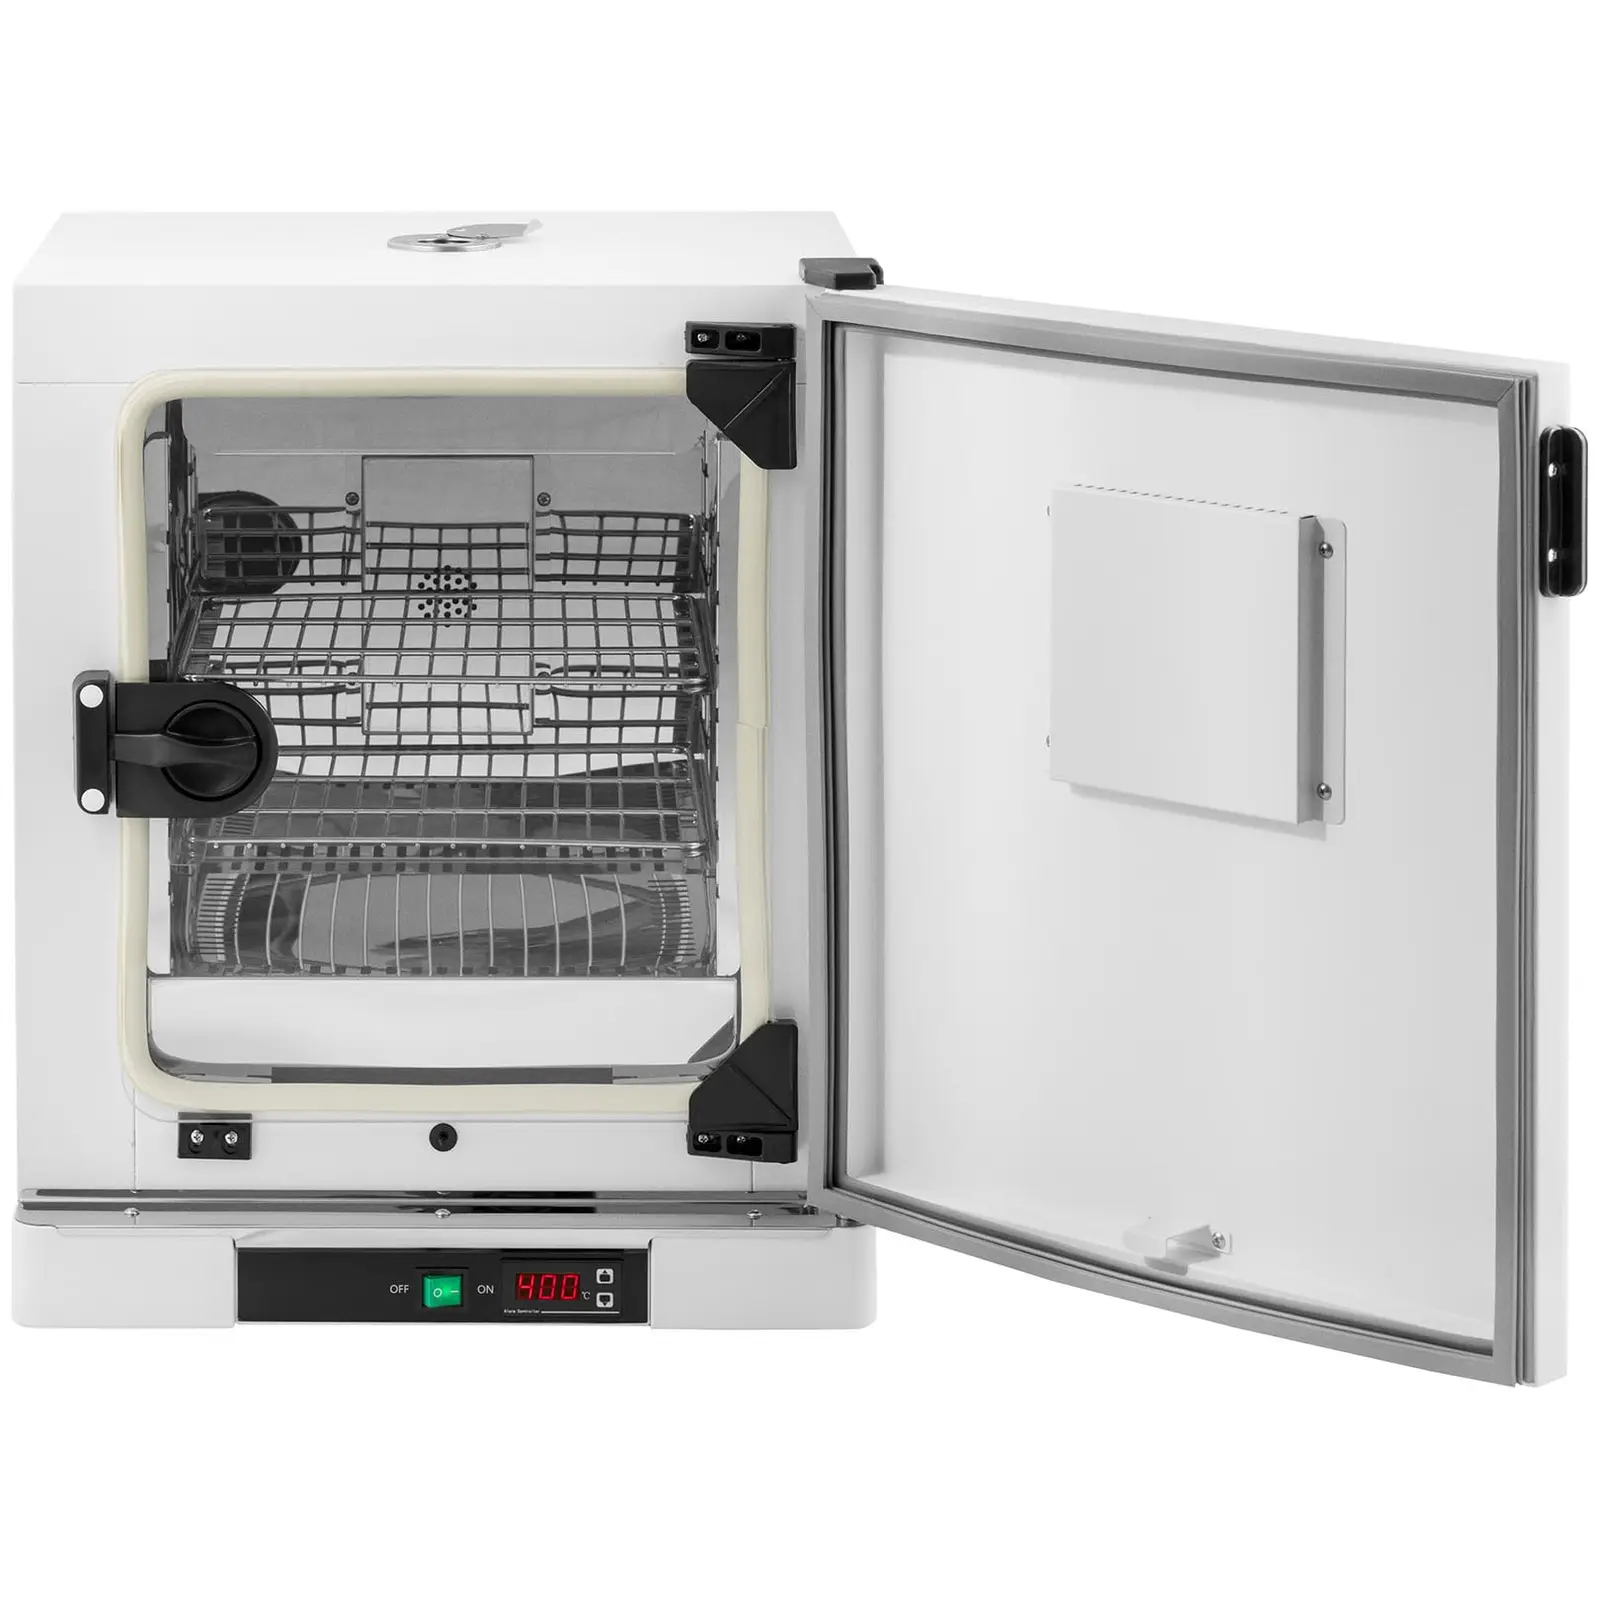 Laboratórny inkubátor - do 70 °C - 43 l - cirkulujúci vzduch